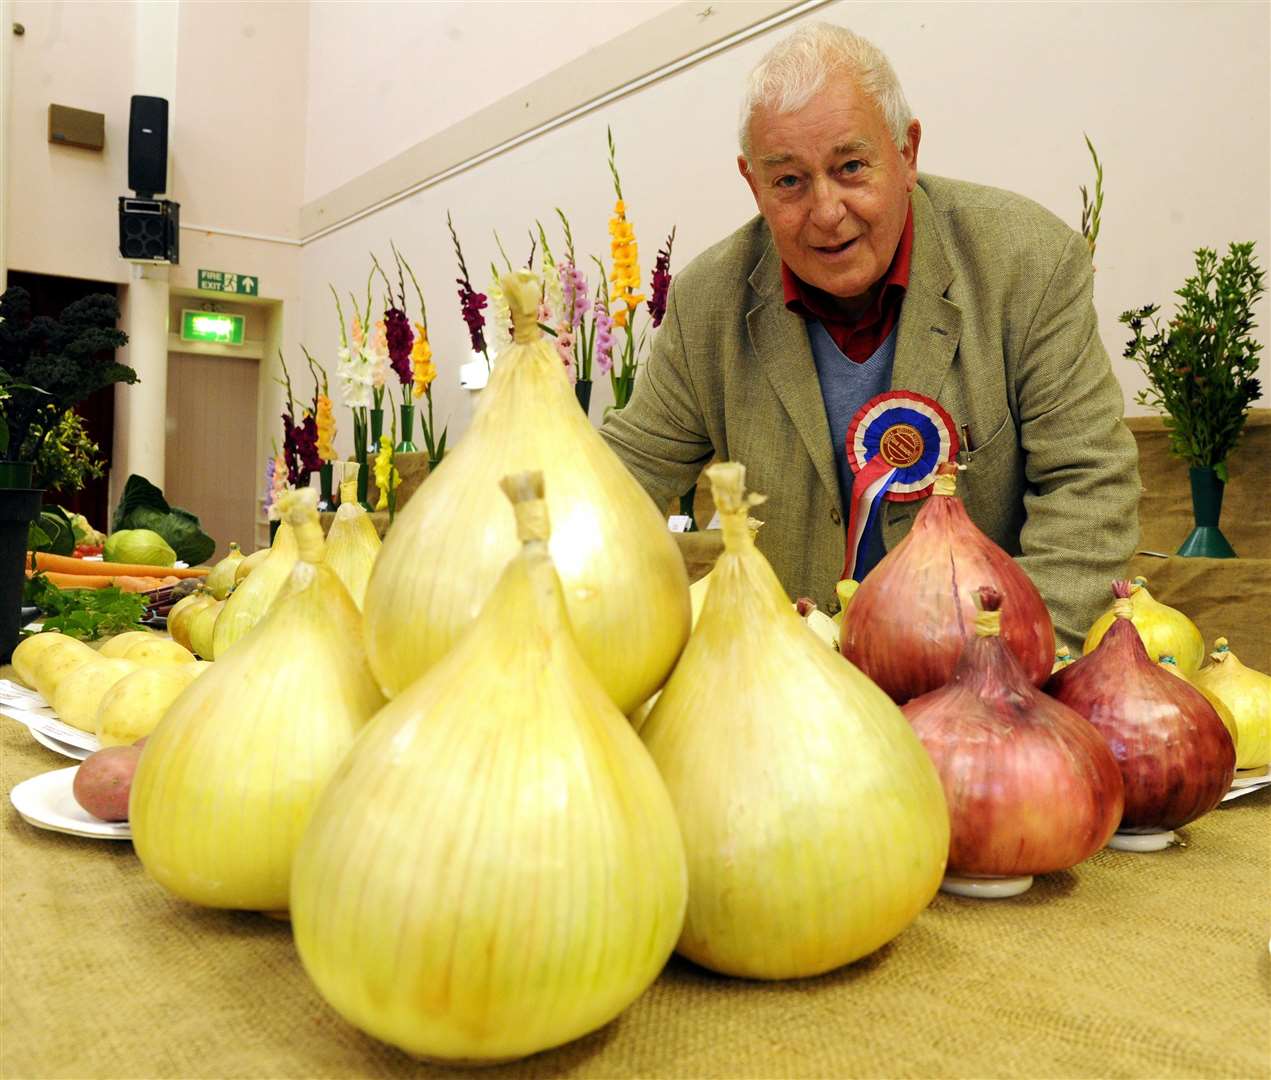 Show manager John Crossman admiring Willie McKenzie's giant onions.